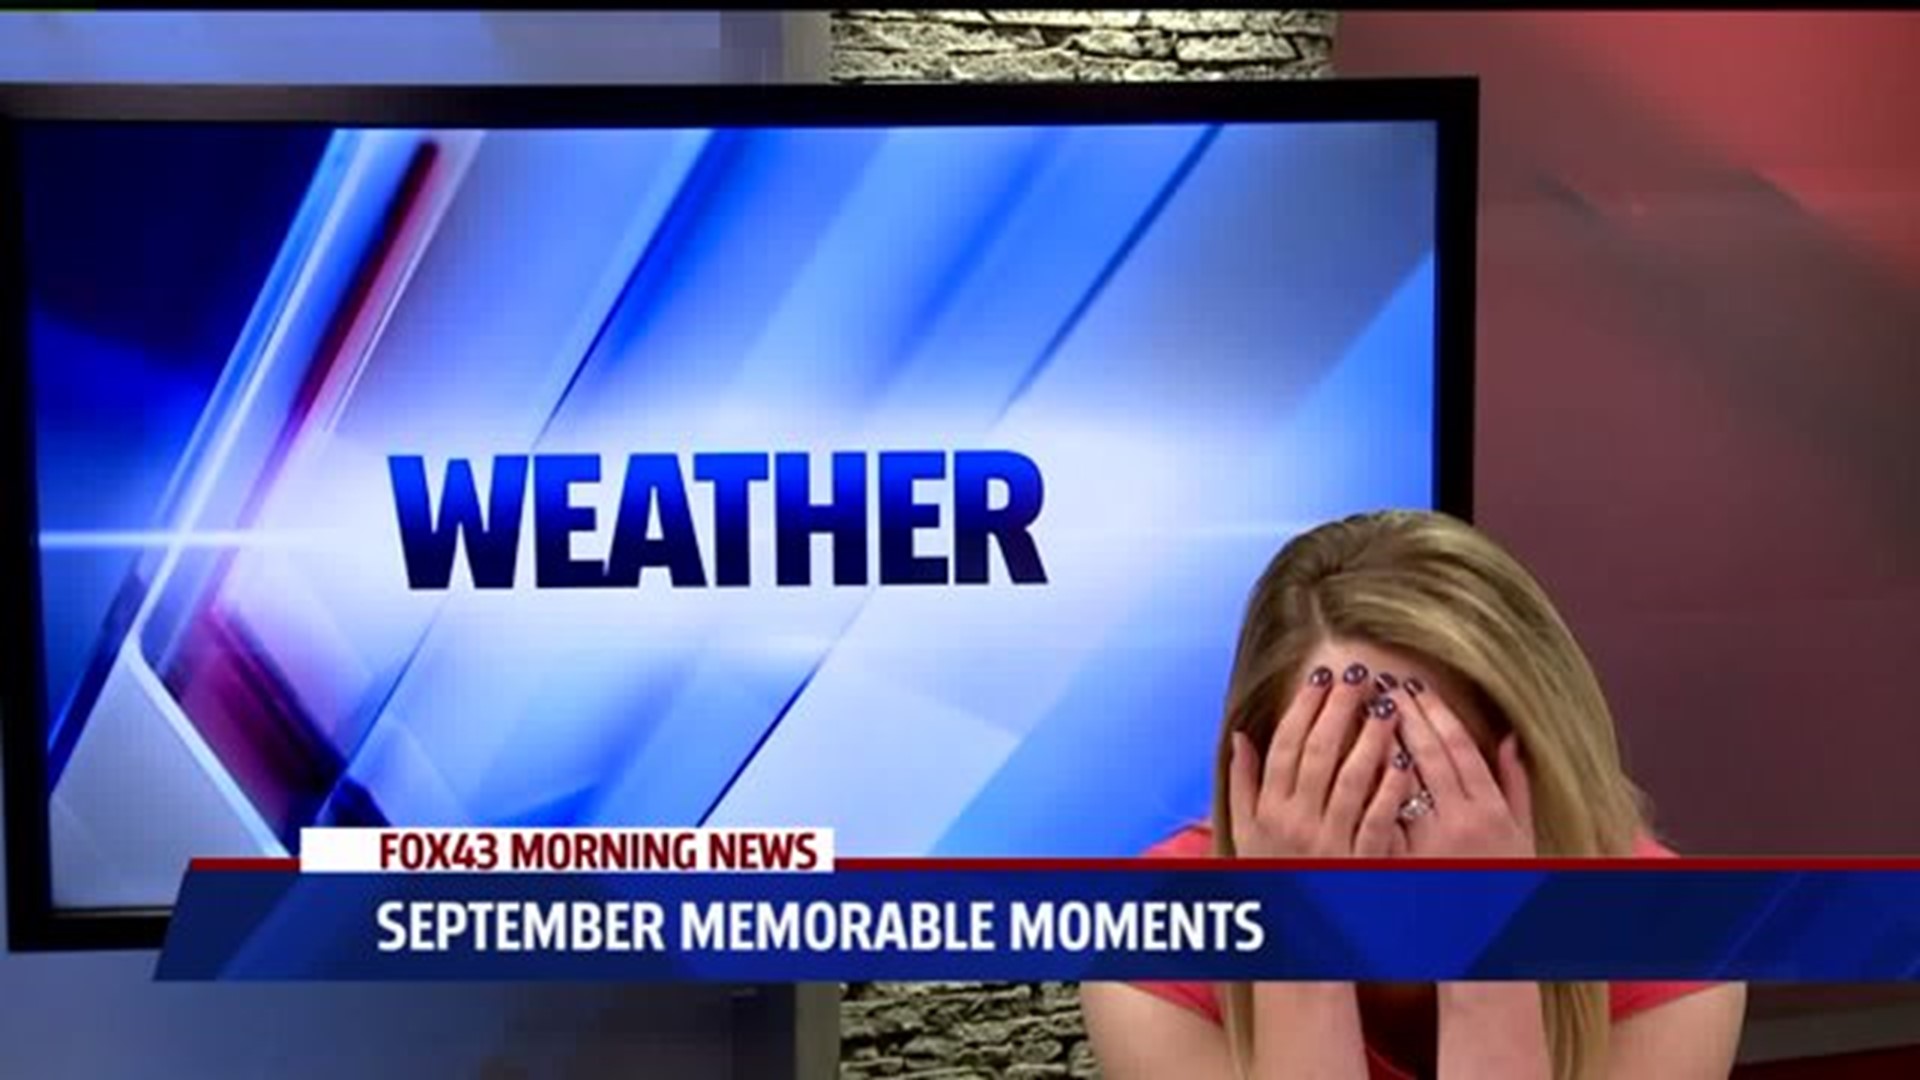 September`s Memorable Moments at Fox 43 Morning News